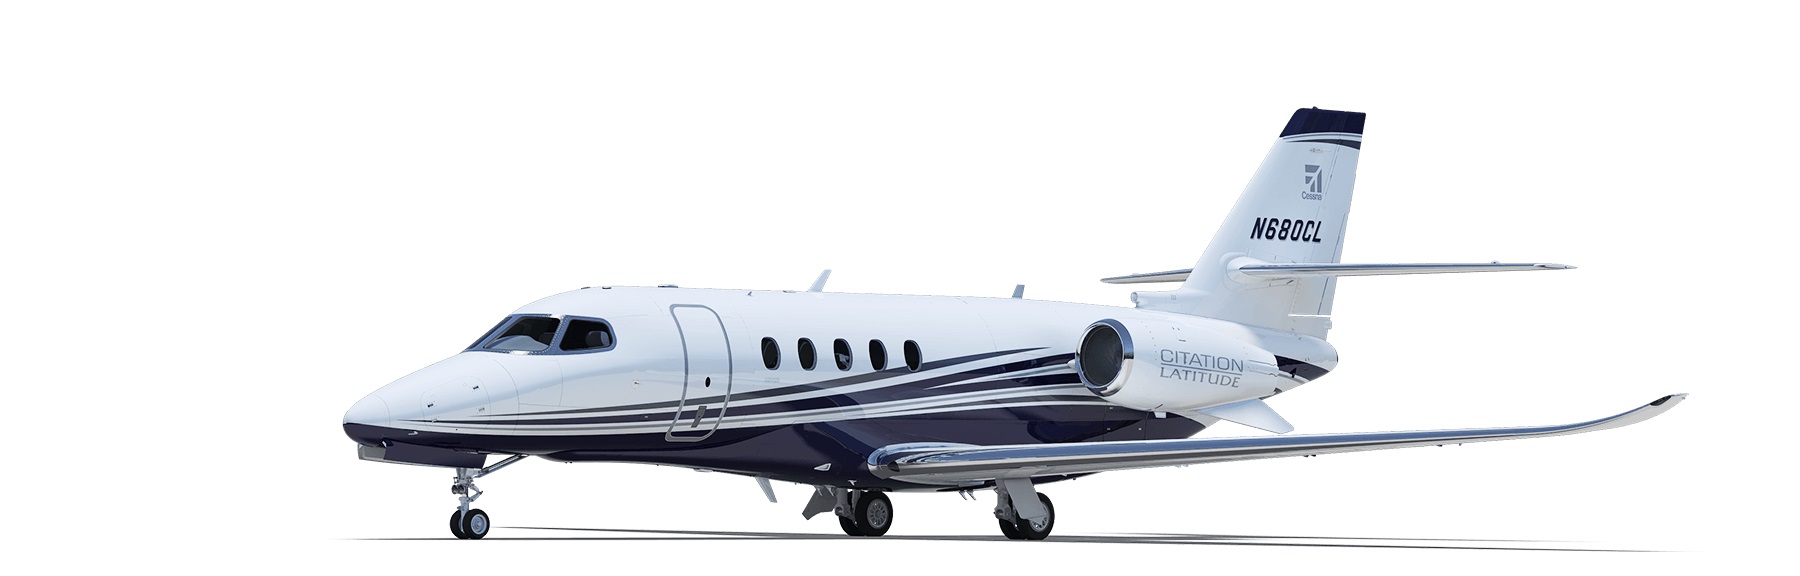 Citation Latitude extends reign as most delivered midsize business jet | The JetAv Blog